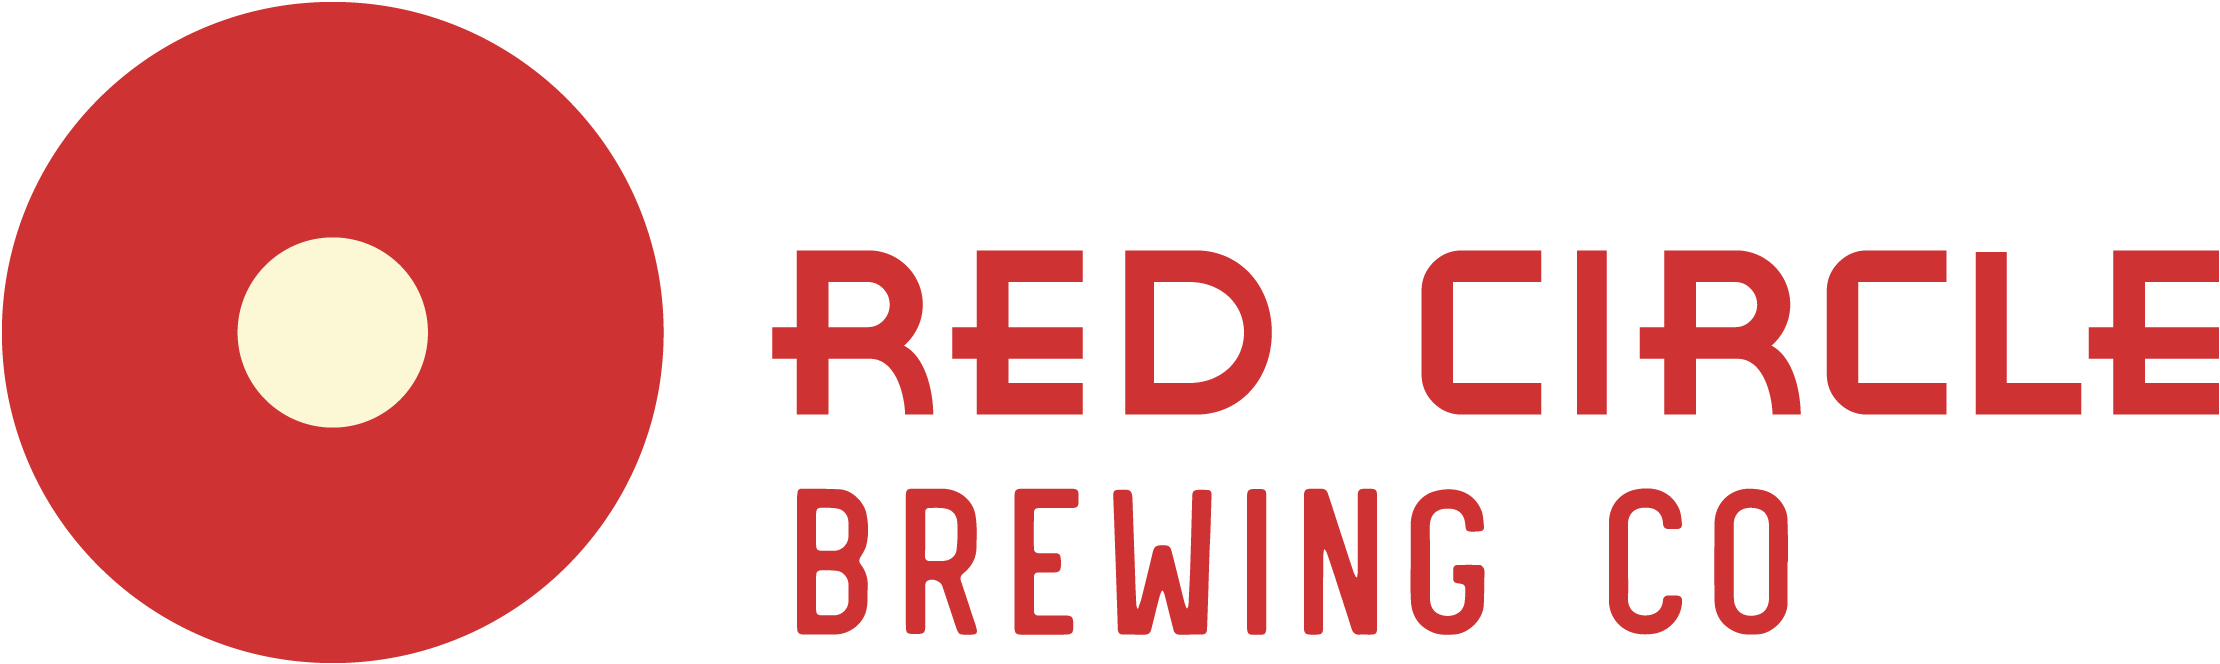 Red Circle Company Logo - Red Circle Brewing Co